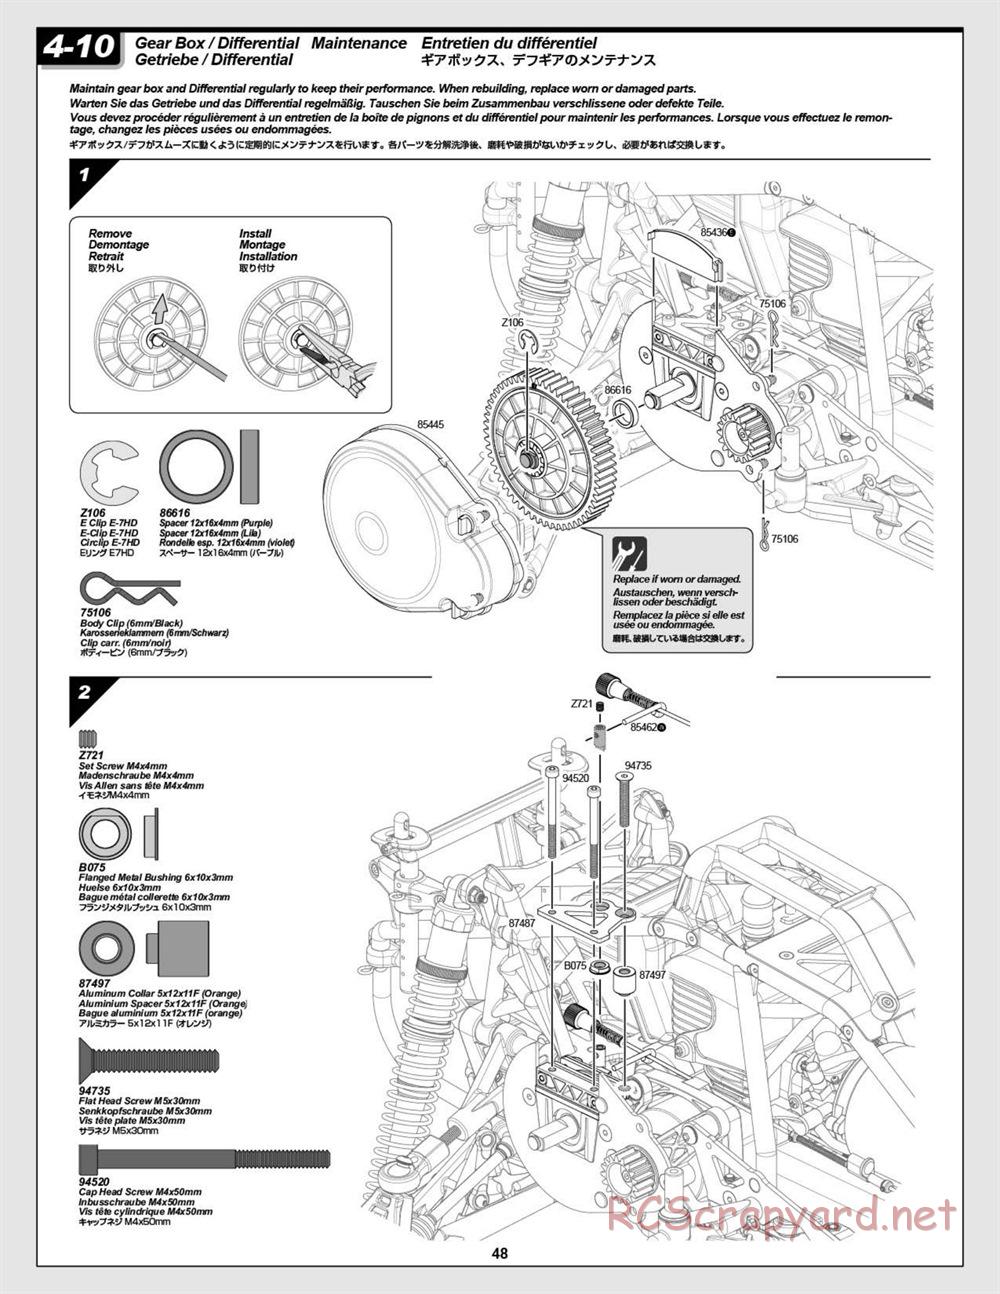 HPI - Baja 5T - Manual - Page 48